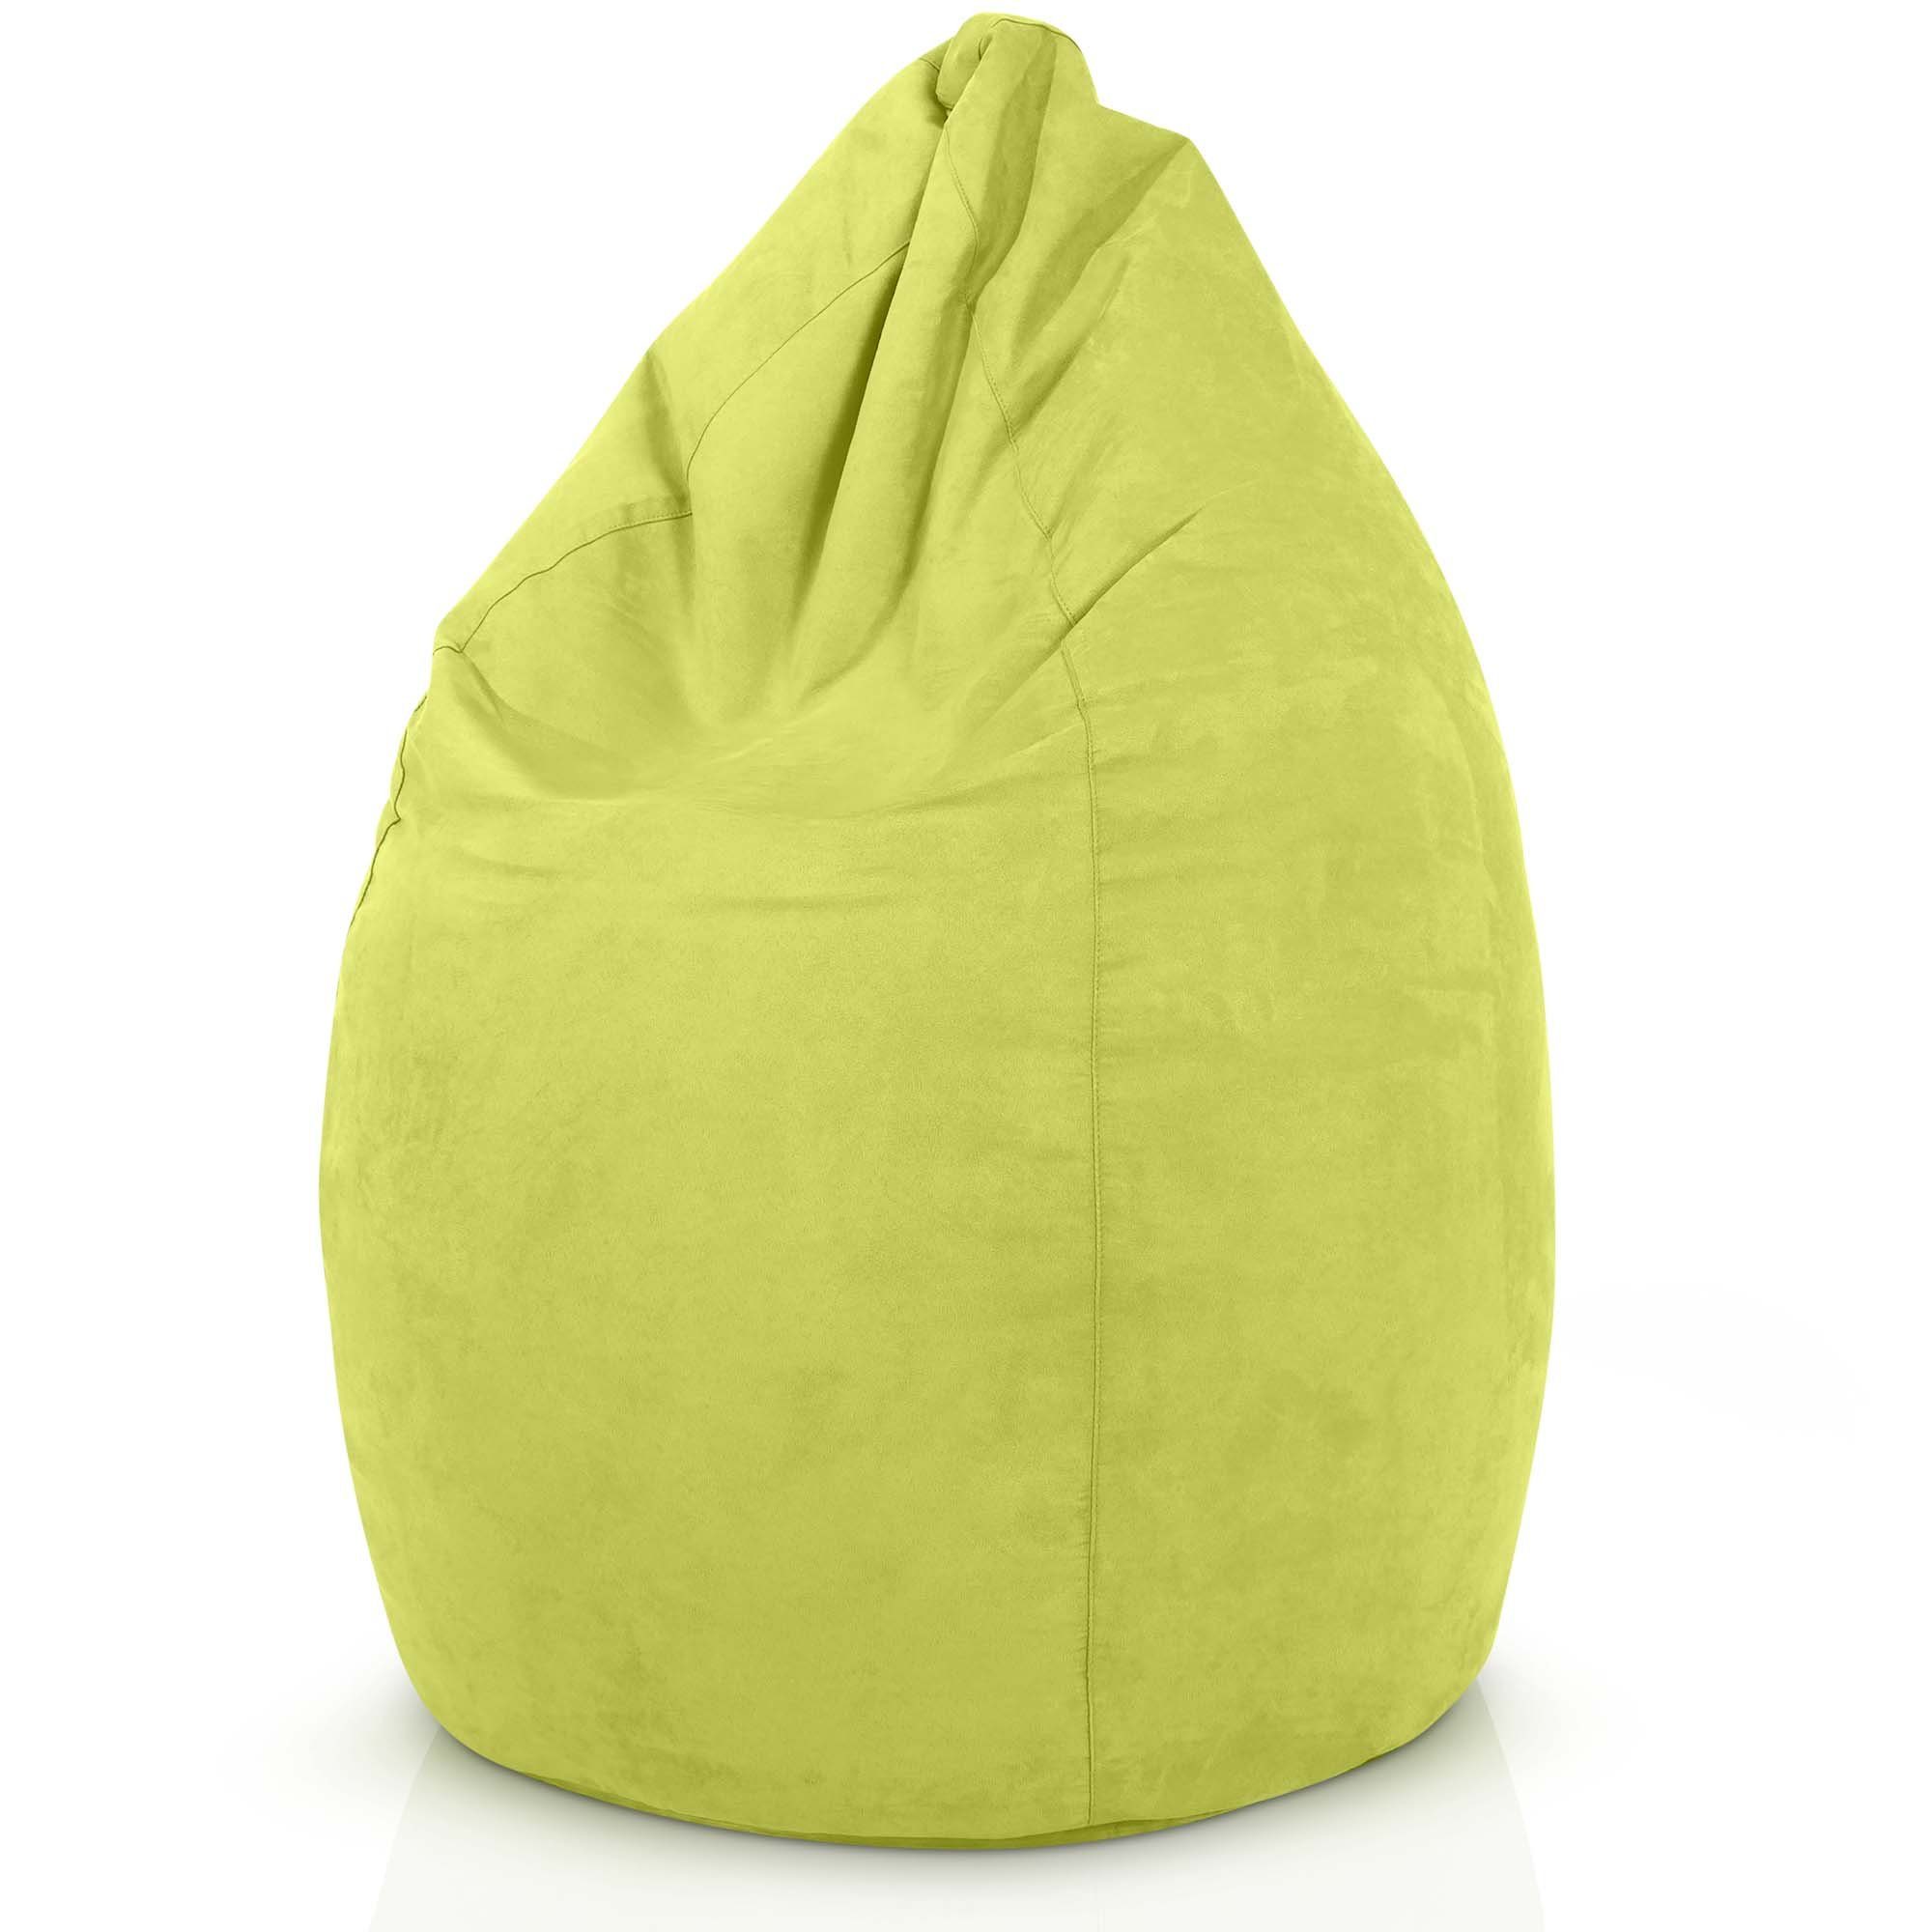 Green Bean Sitzsack Drop (Sitzsack mit Rückenlehne 60x60x90cm - Indoor Sitzkissen 220L Füllung, Kuschelig Waschbar), Bean Bag Bodenkissen Lounge Chair Sitzhocker Kindersitzsack grün